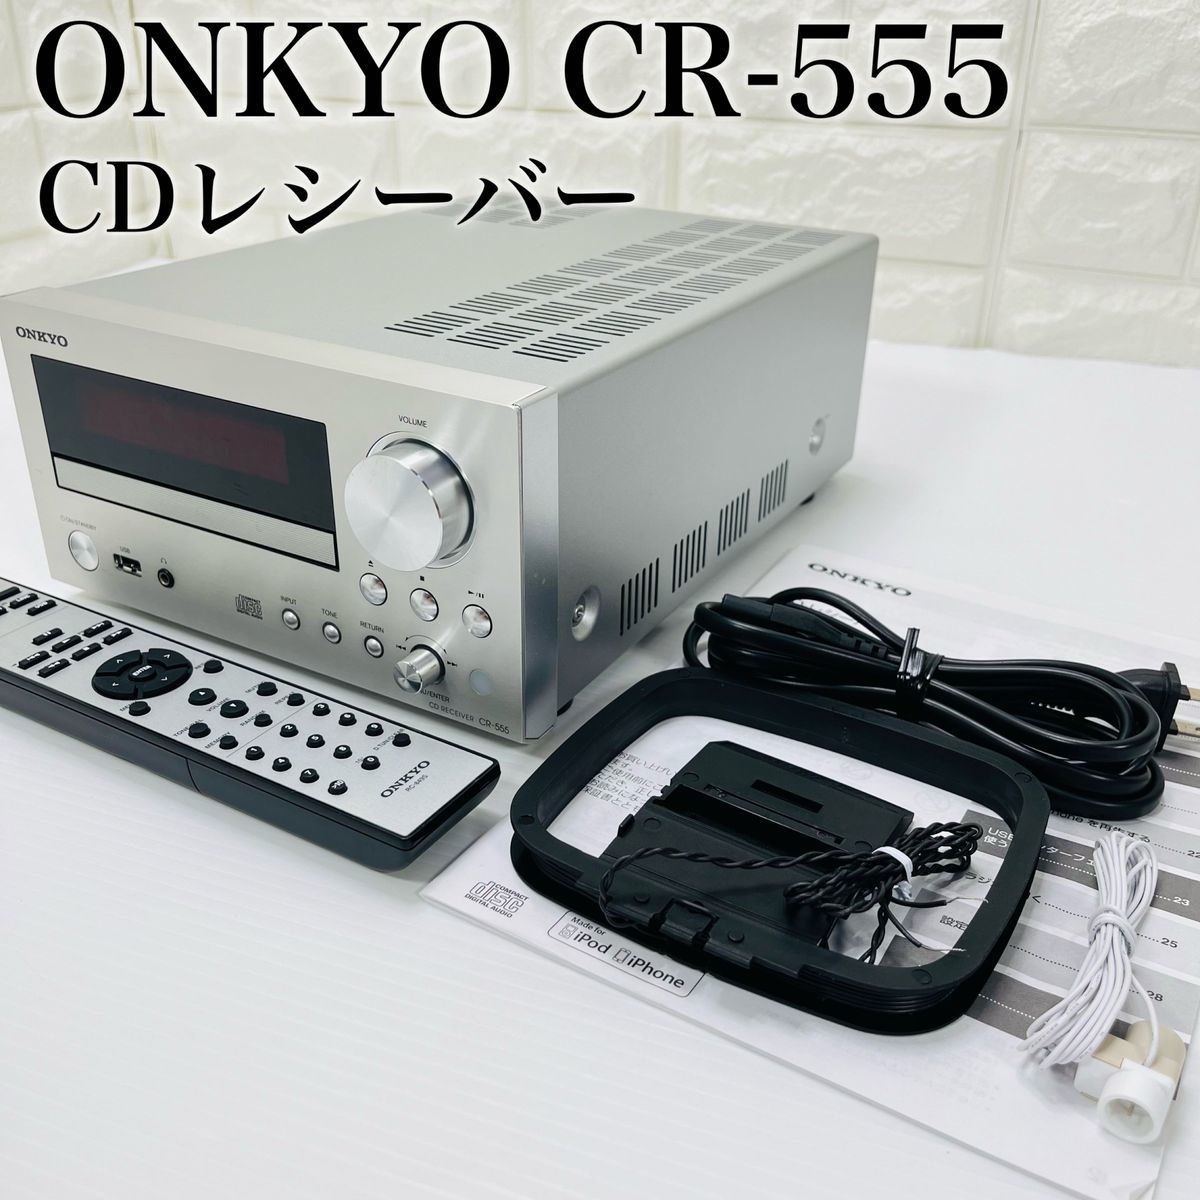 ONKYO オンキョー CDレシーバー CR-555 リモコン付き 希少 廃盤 CDチューナーアンプ オーディオ 音響